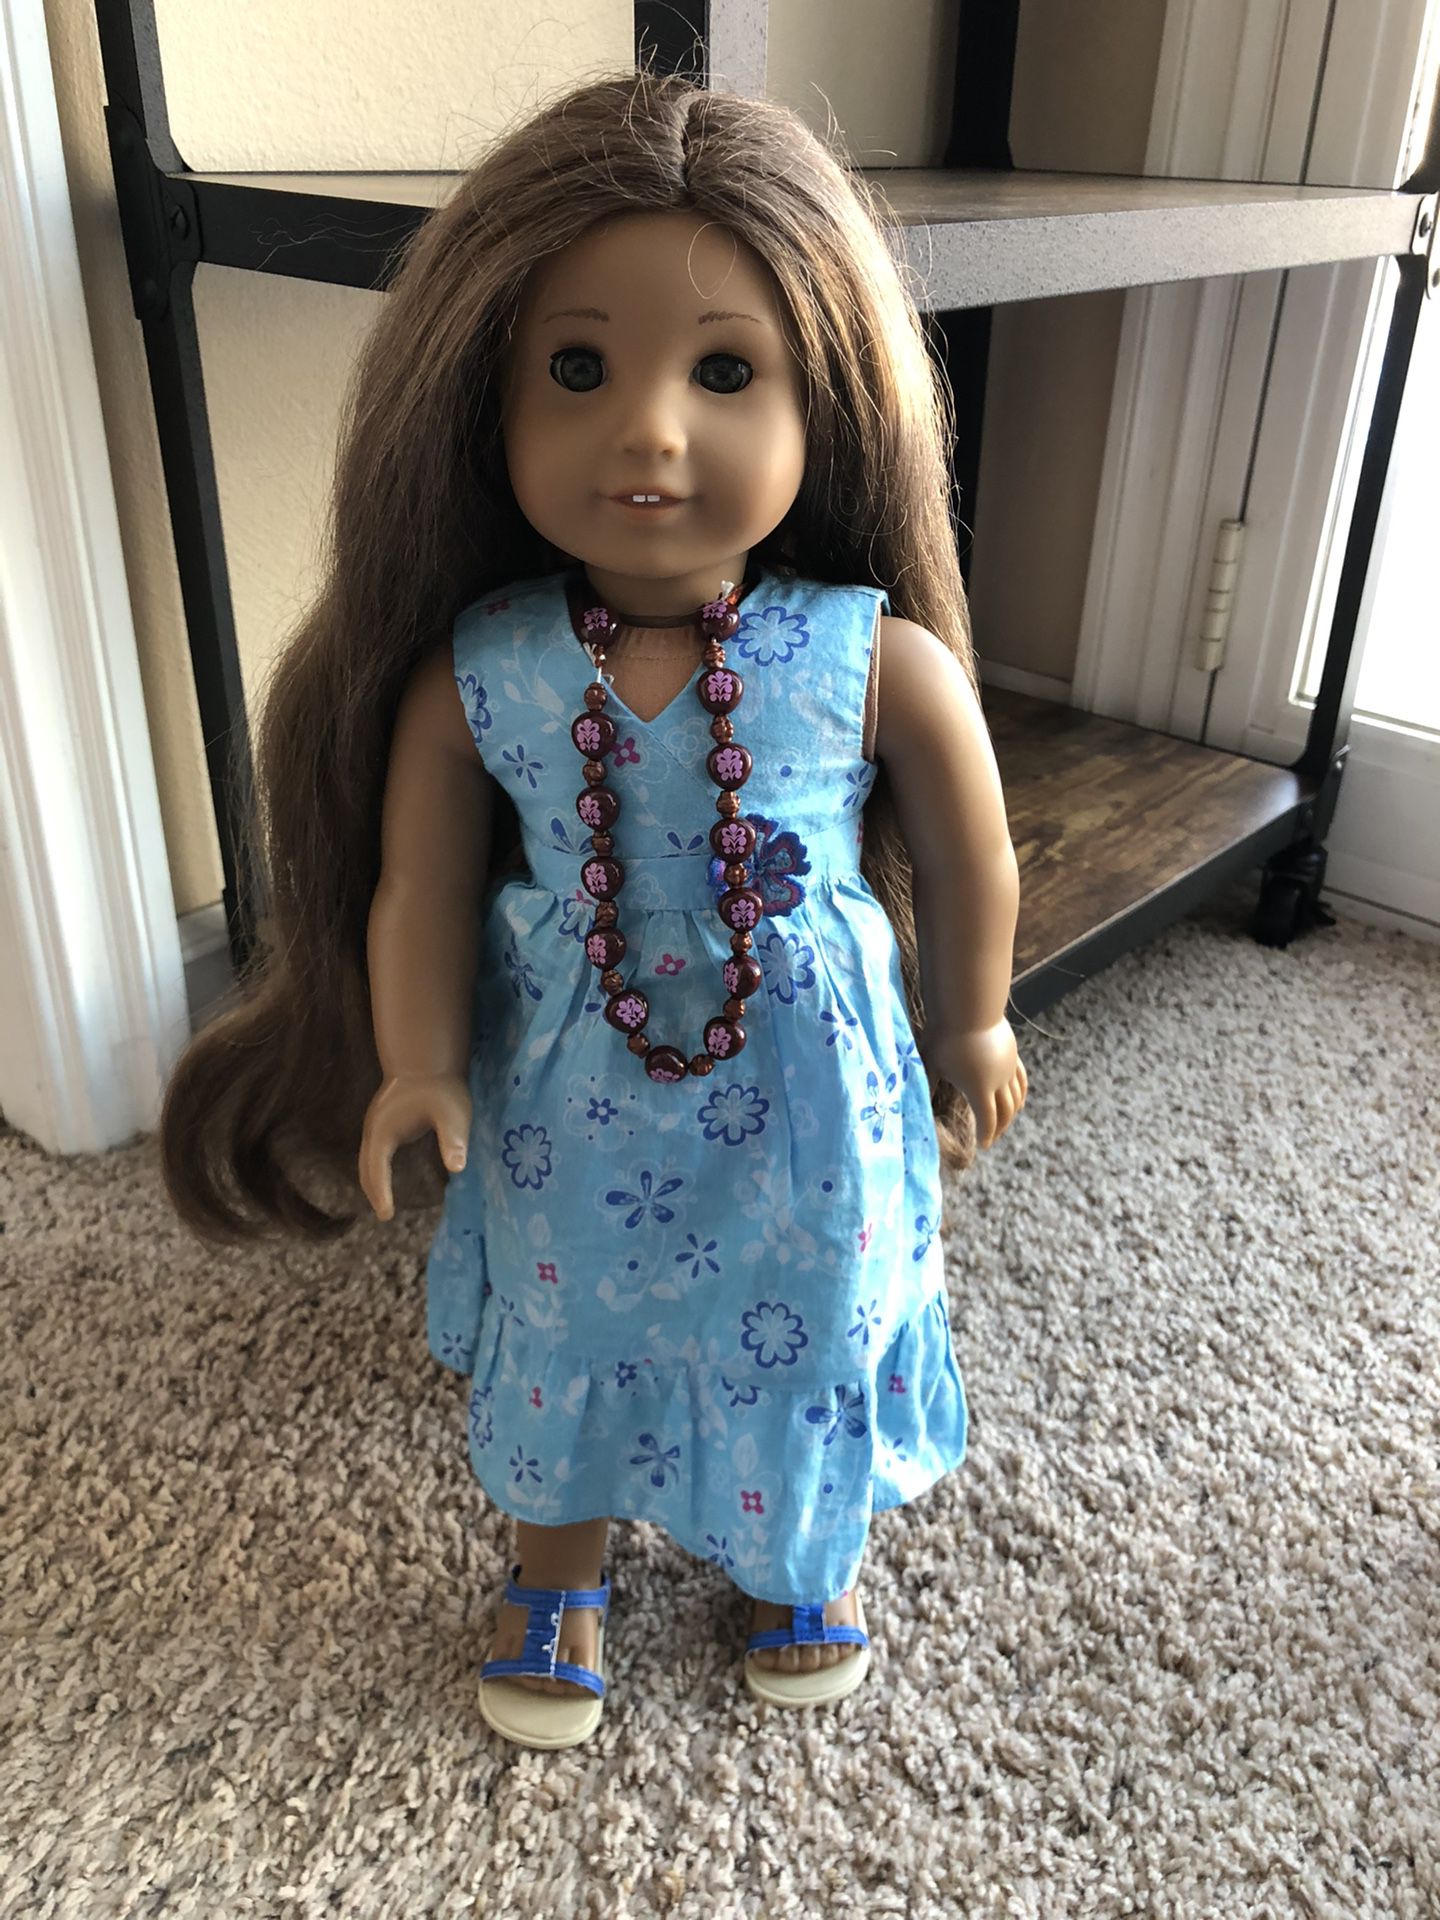 American Girl Kanani Doll